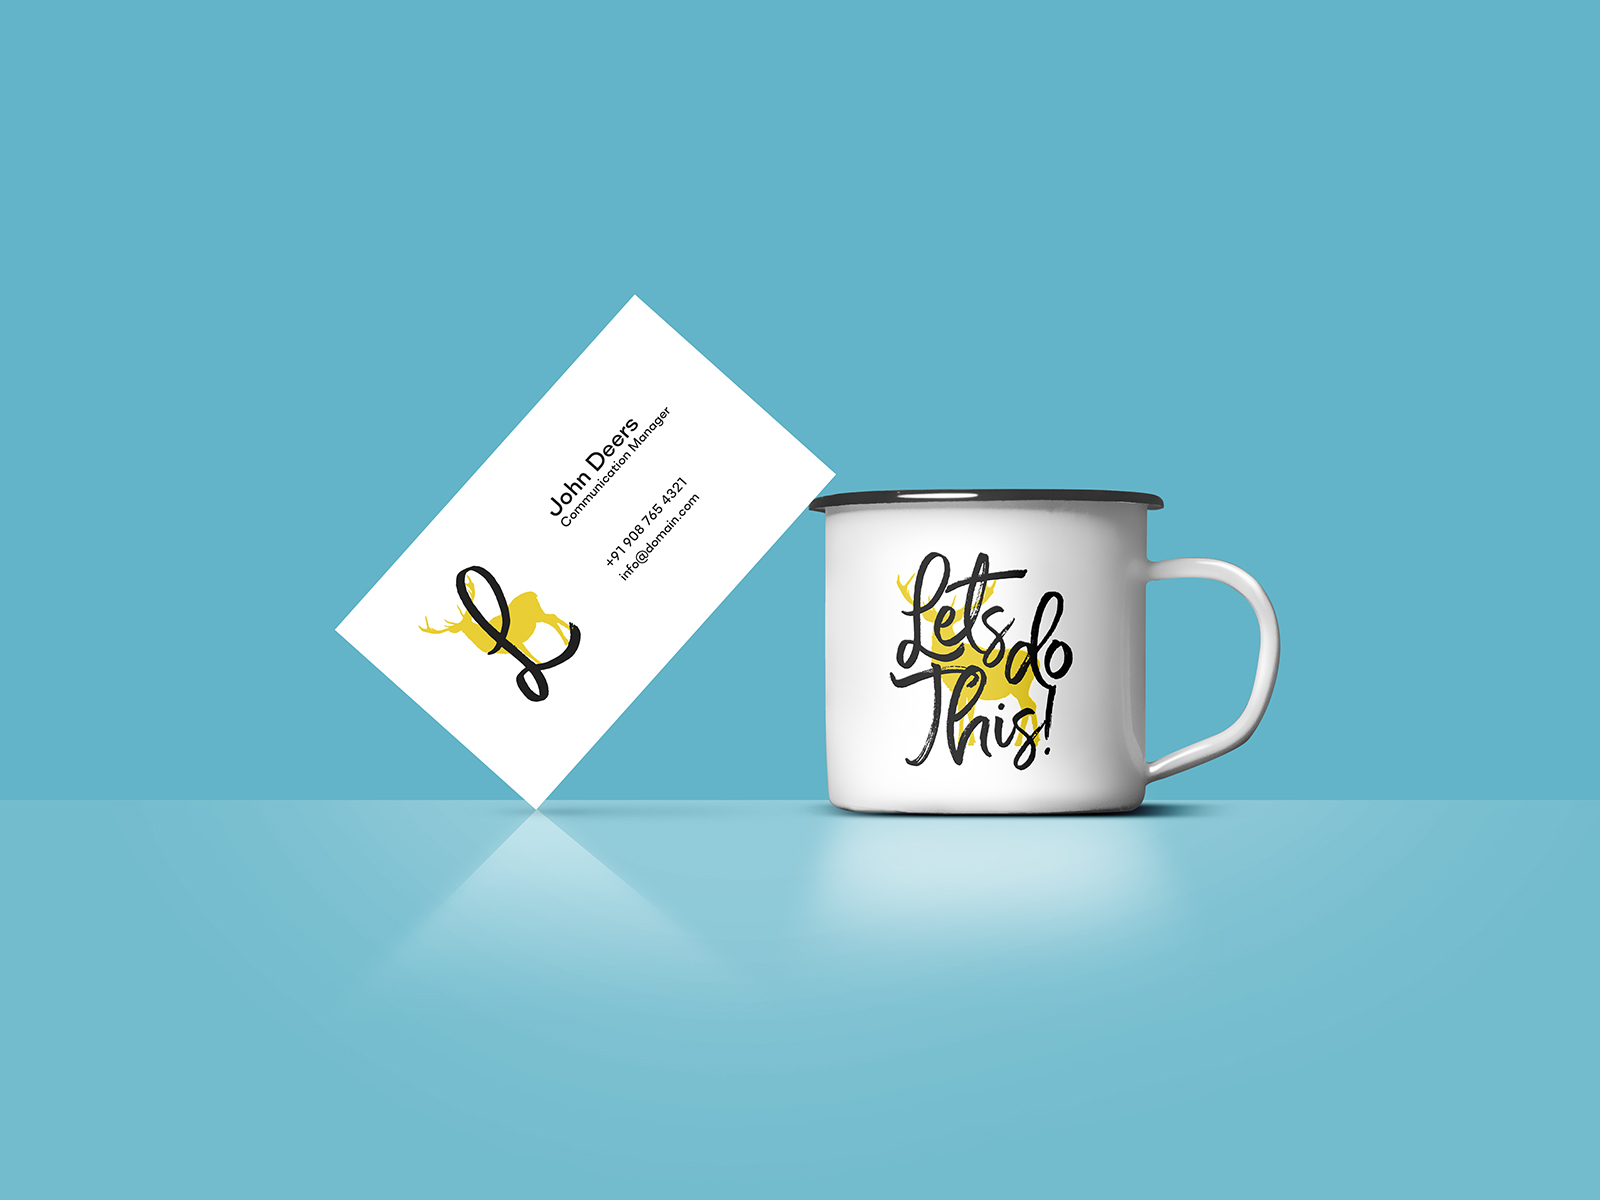 Free Business Card & Coffee Cup Mockup